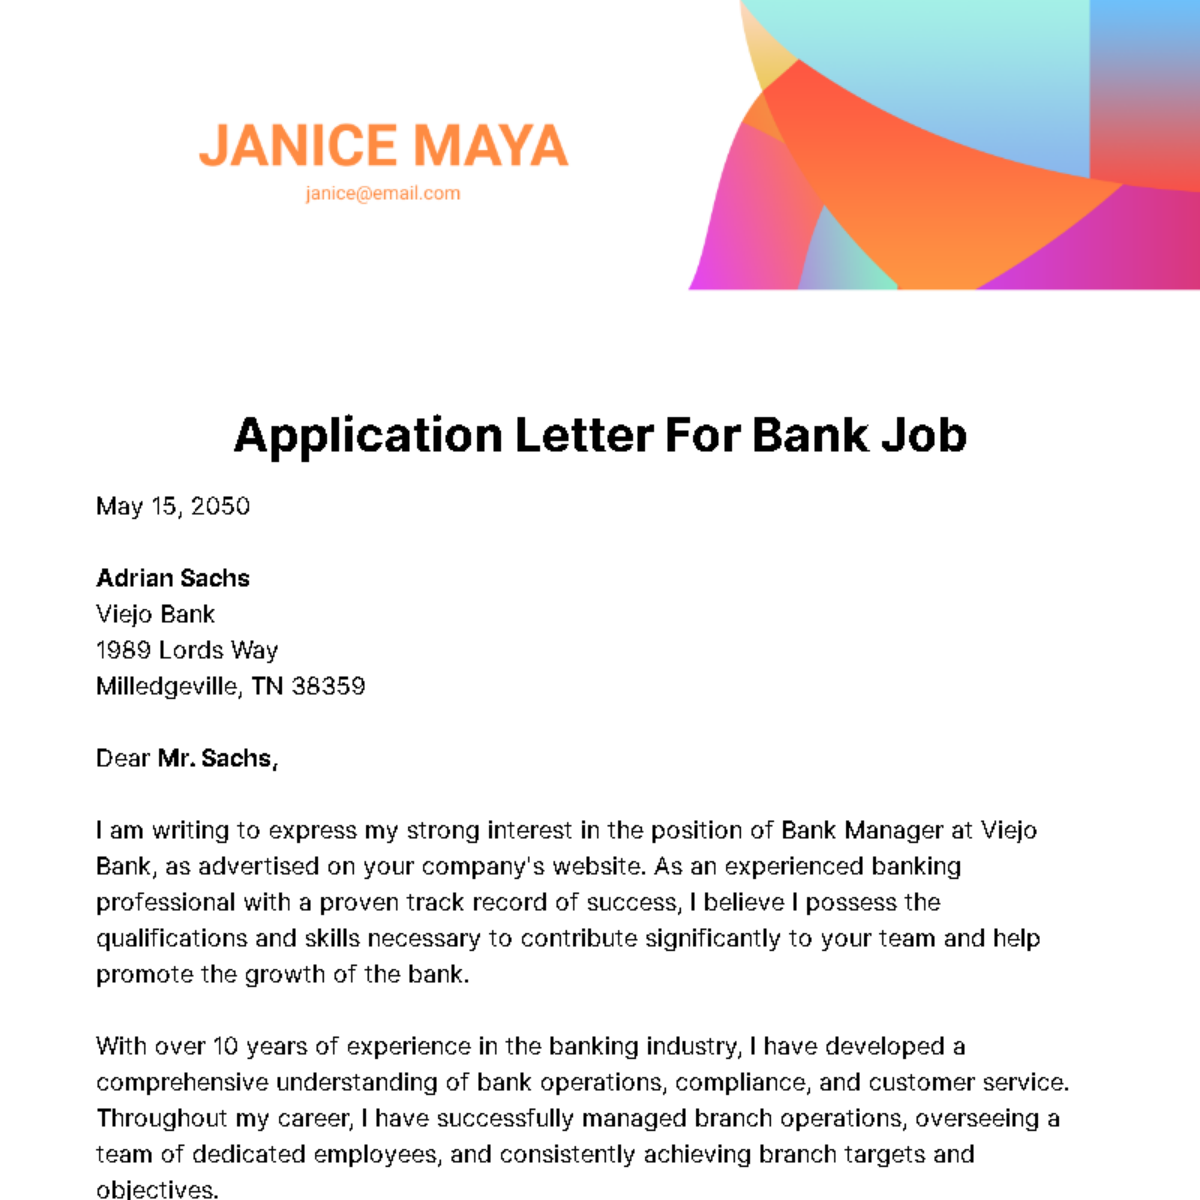 Application Letter for Bank Job Template